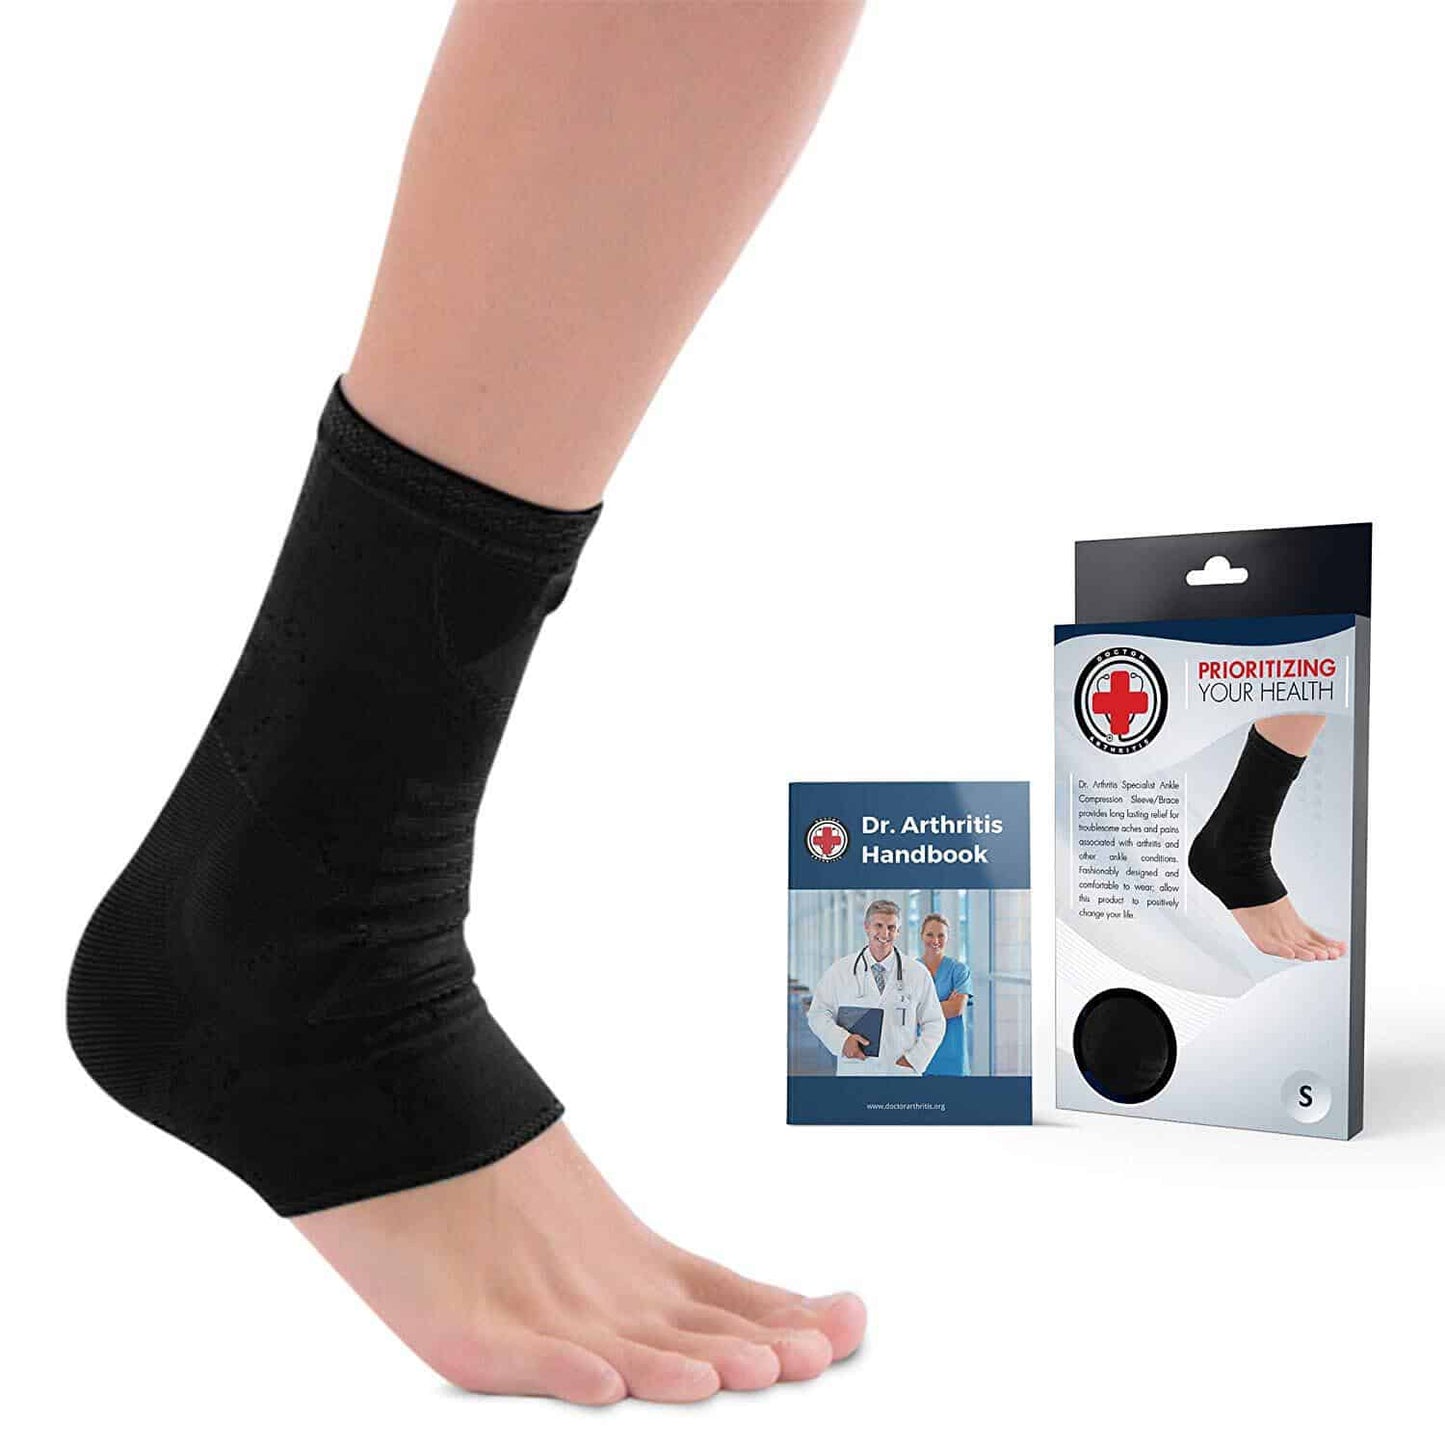 Ankle Compression Sleeve & Dr. Arthritis Handbook - Dr. Arthritis